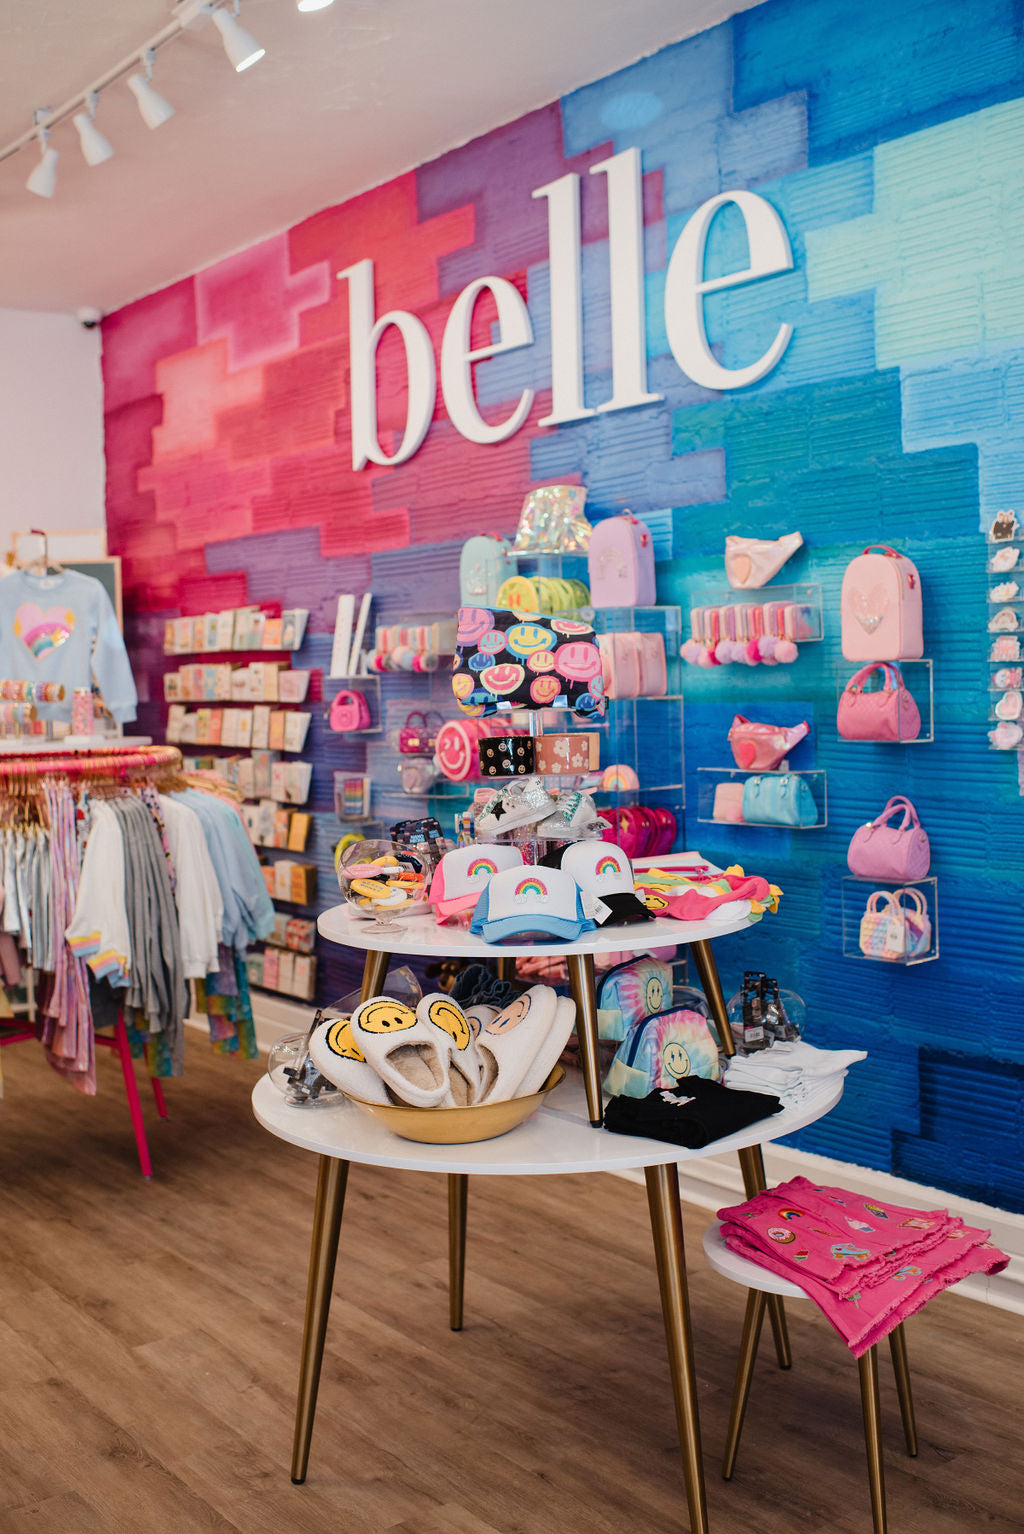 belle: a shop for girls